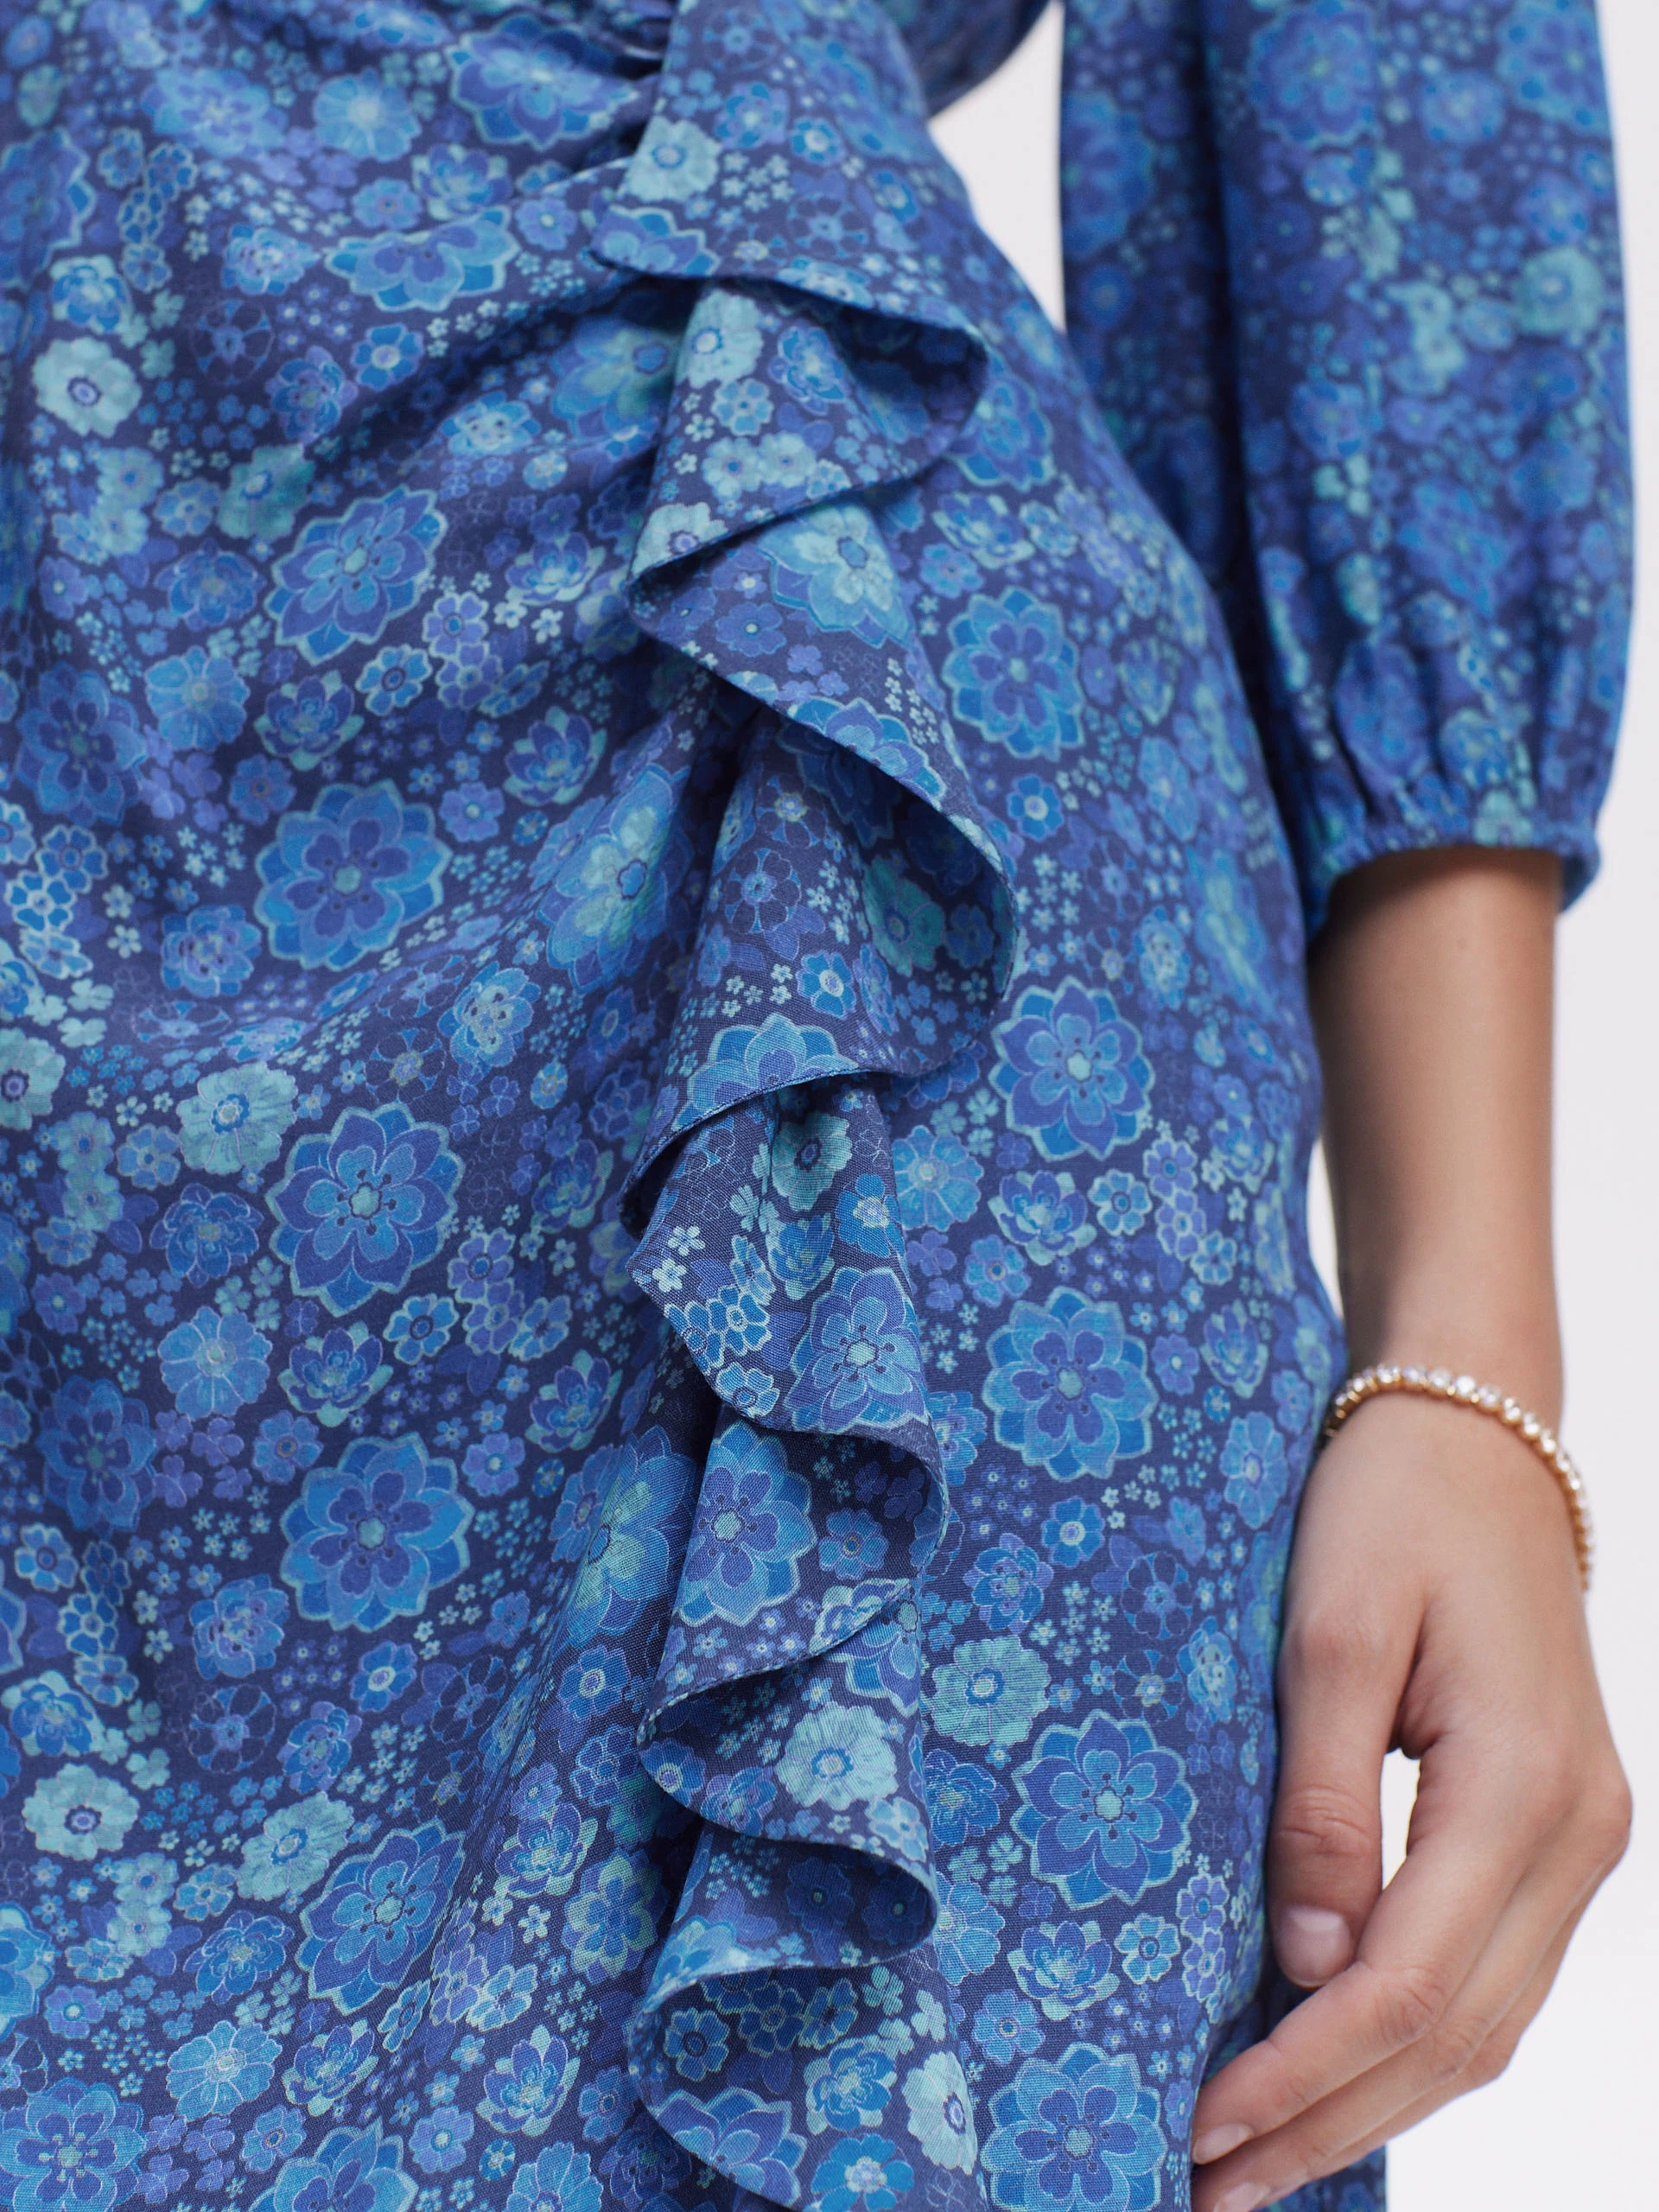 Blue floral pattern dress